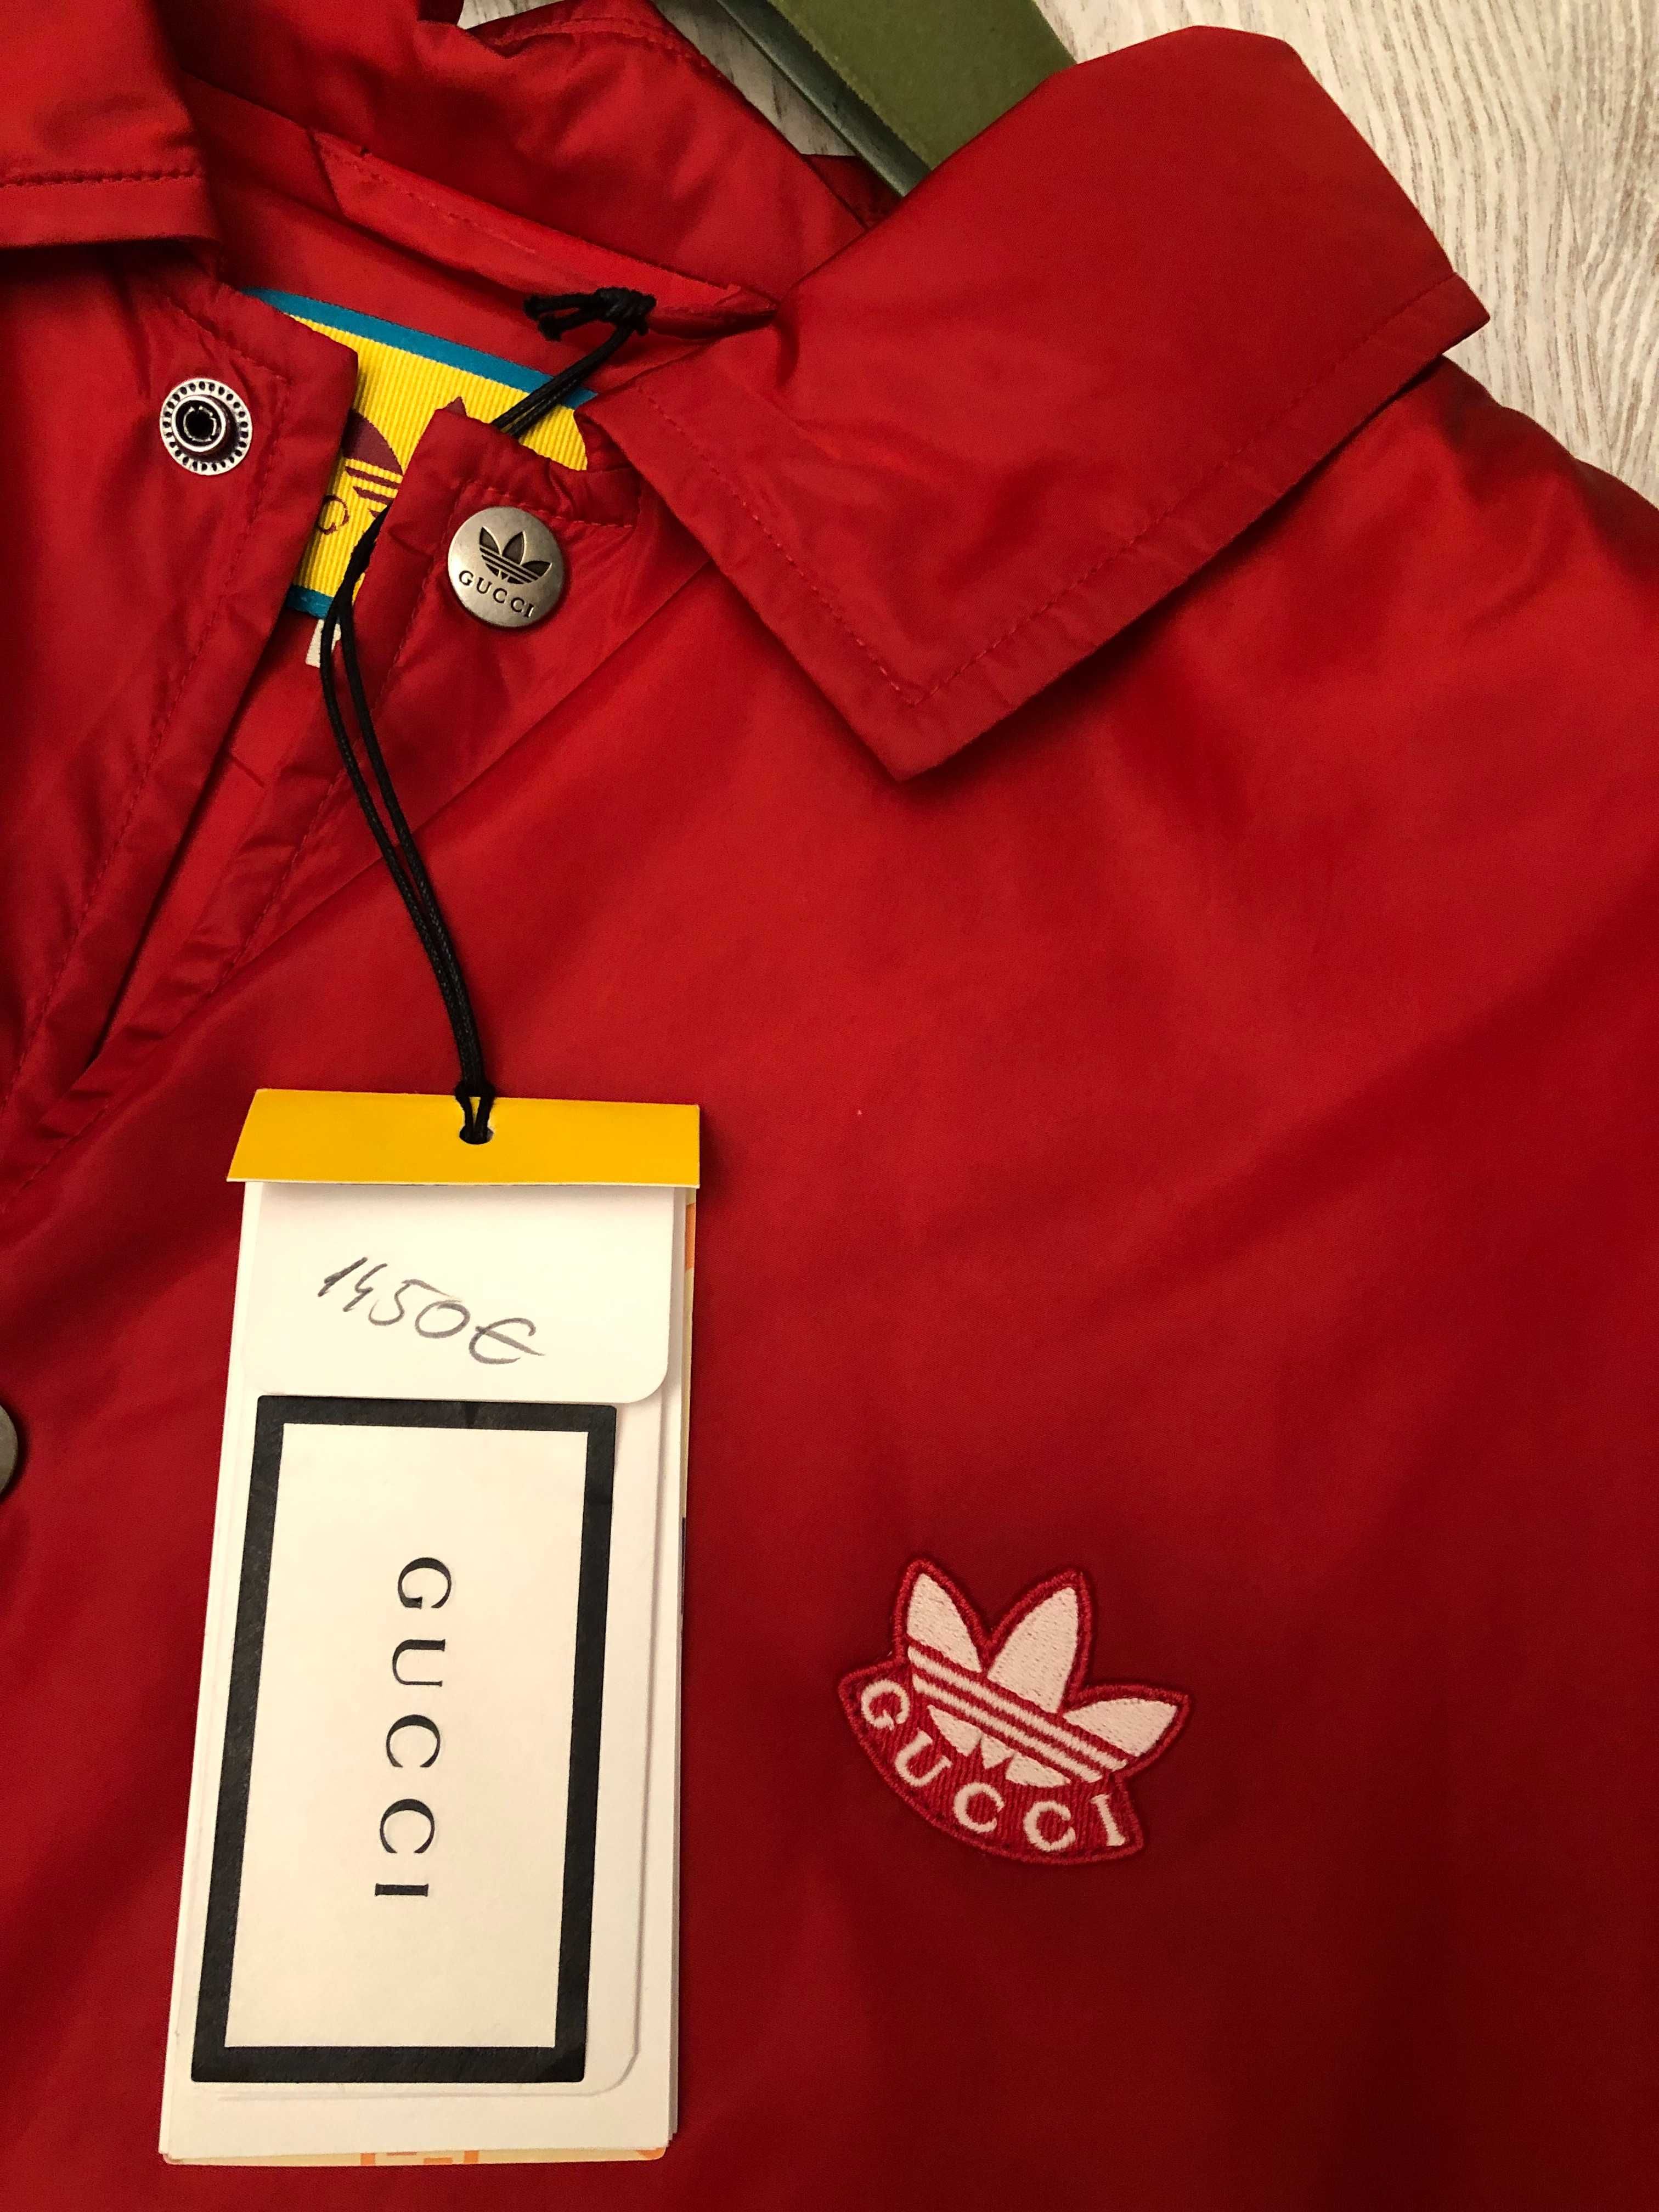 Gucci vs Adidas geaca fas, M-L oversize, originala, retail 1450 euro